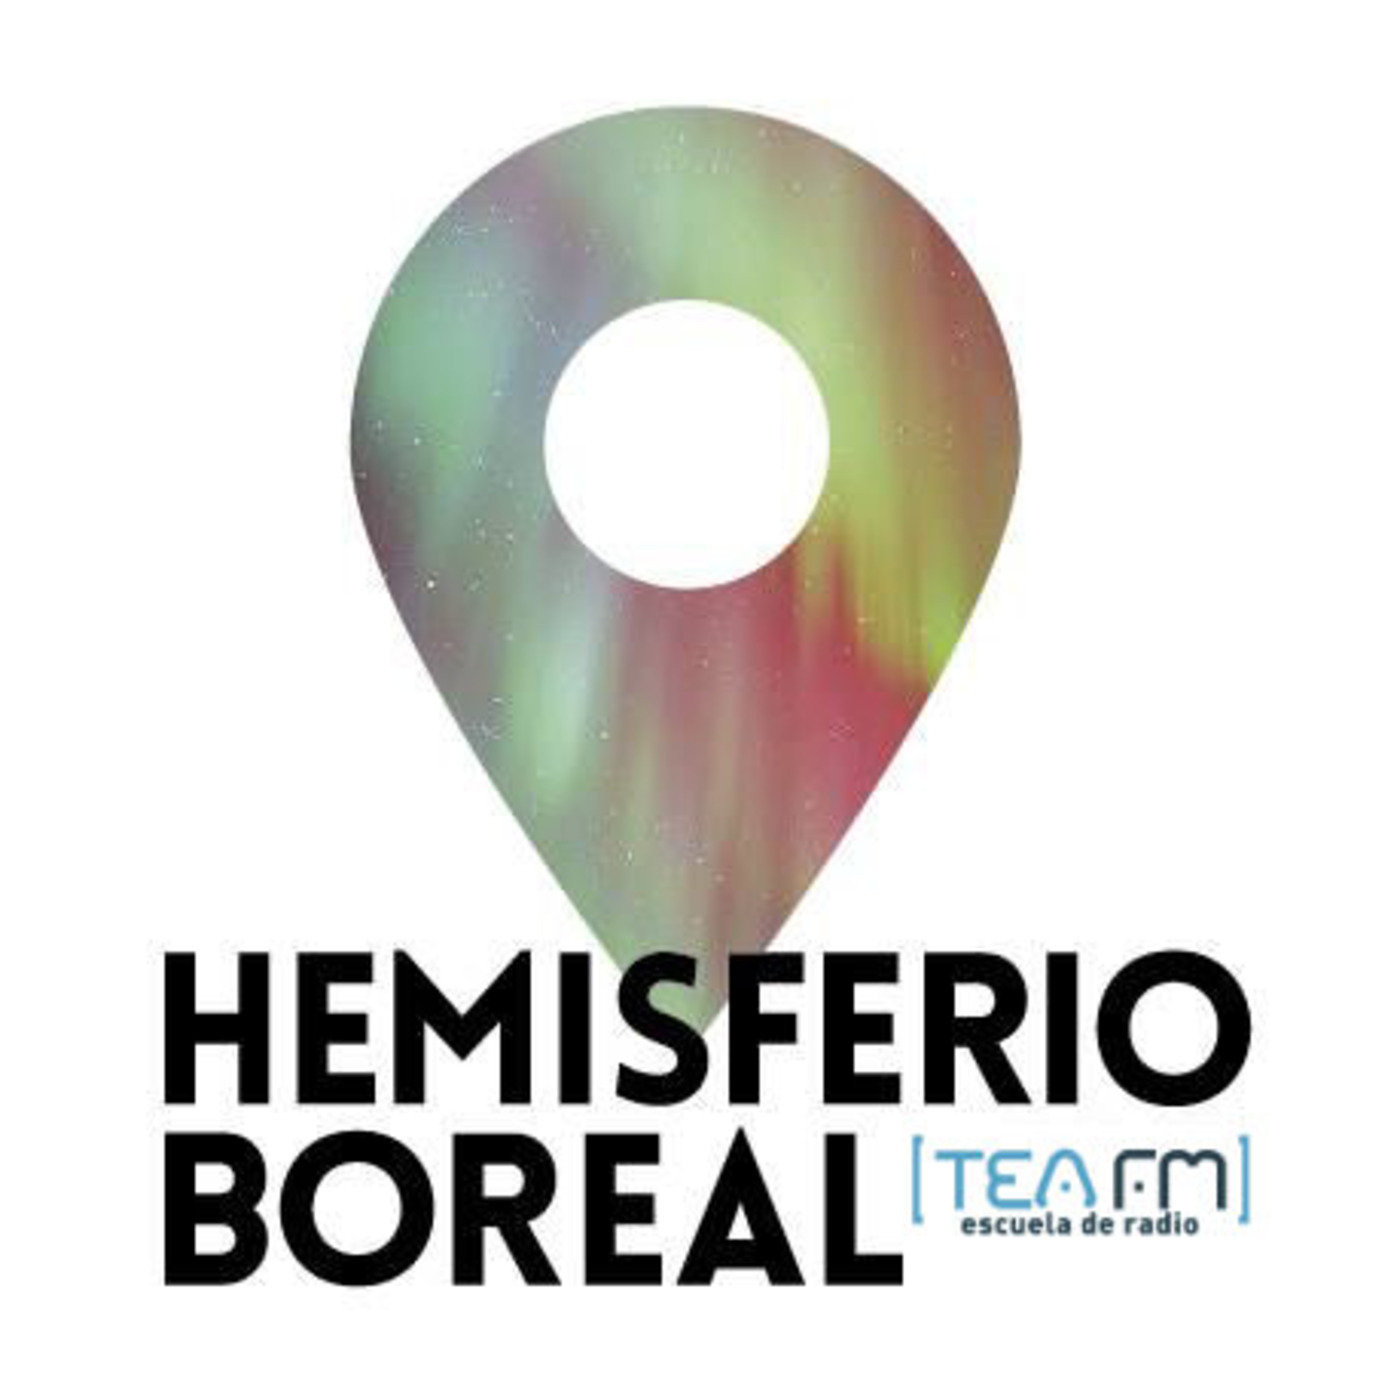 Hemisferio Boreal 032 2014/08/04 Verano